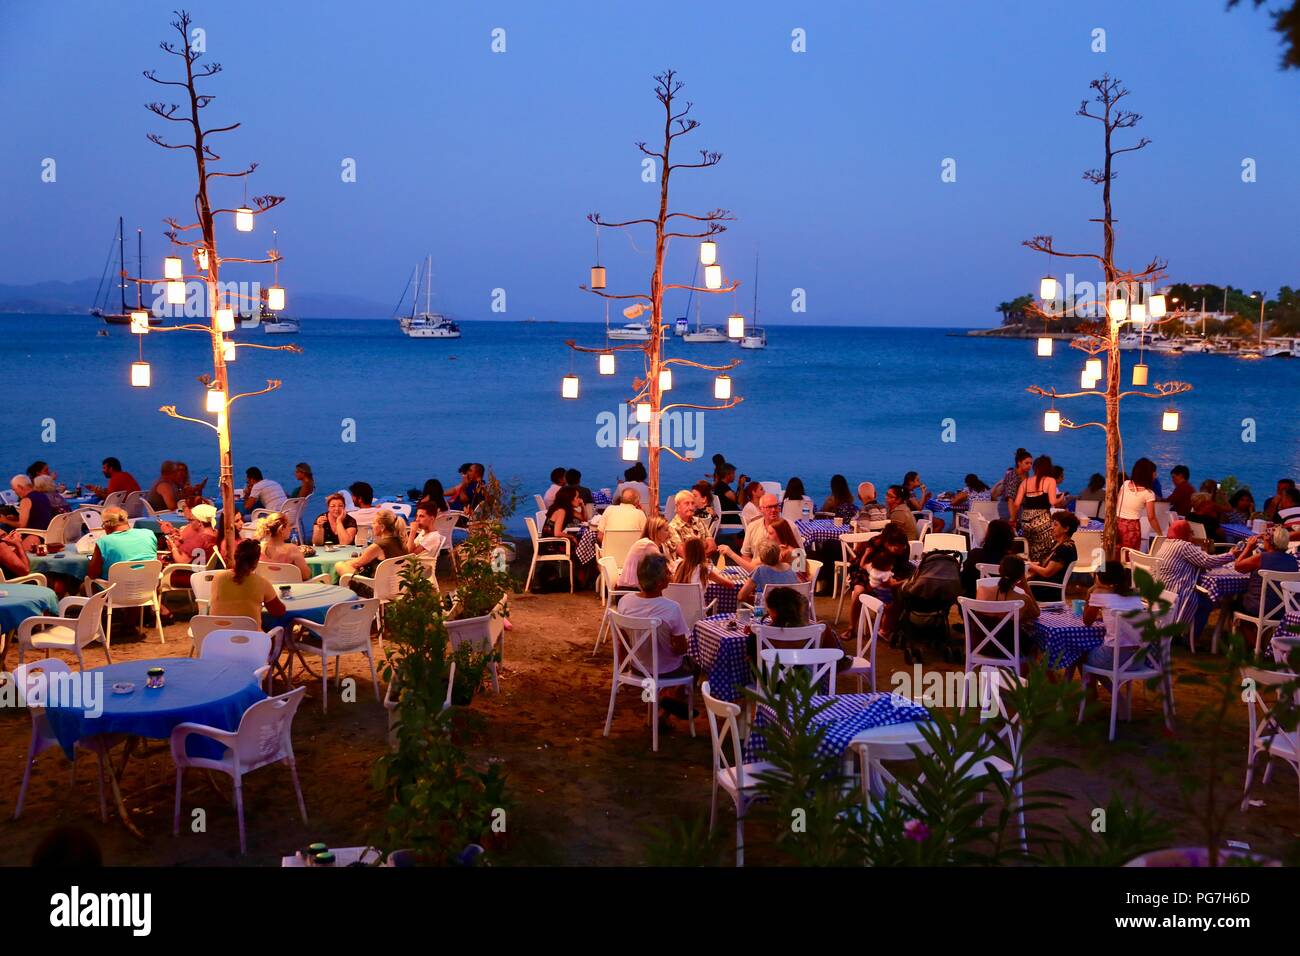 People enjoying twilight time near the beach in Datca.Datca is a port town in southwestern Turkey. Stock Photo